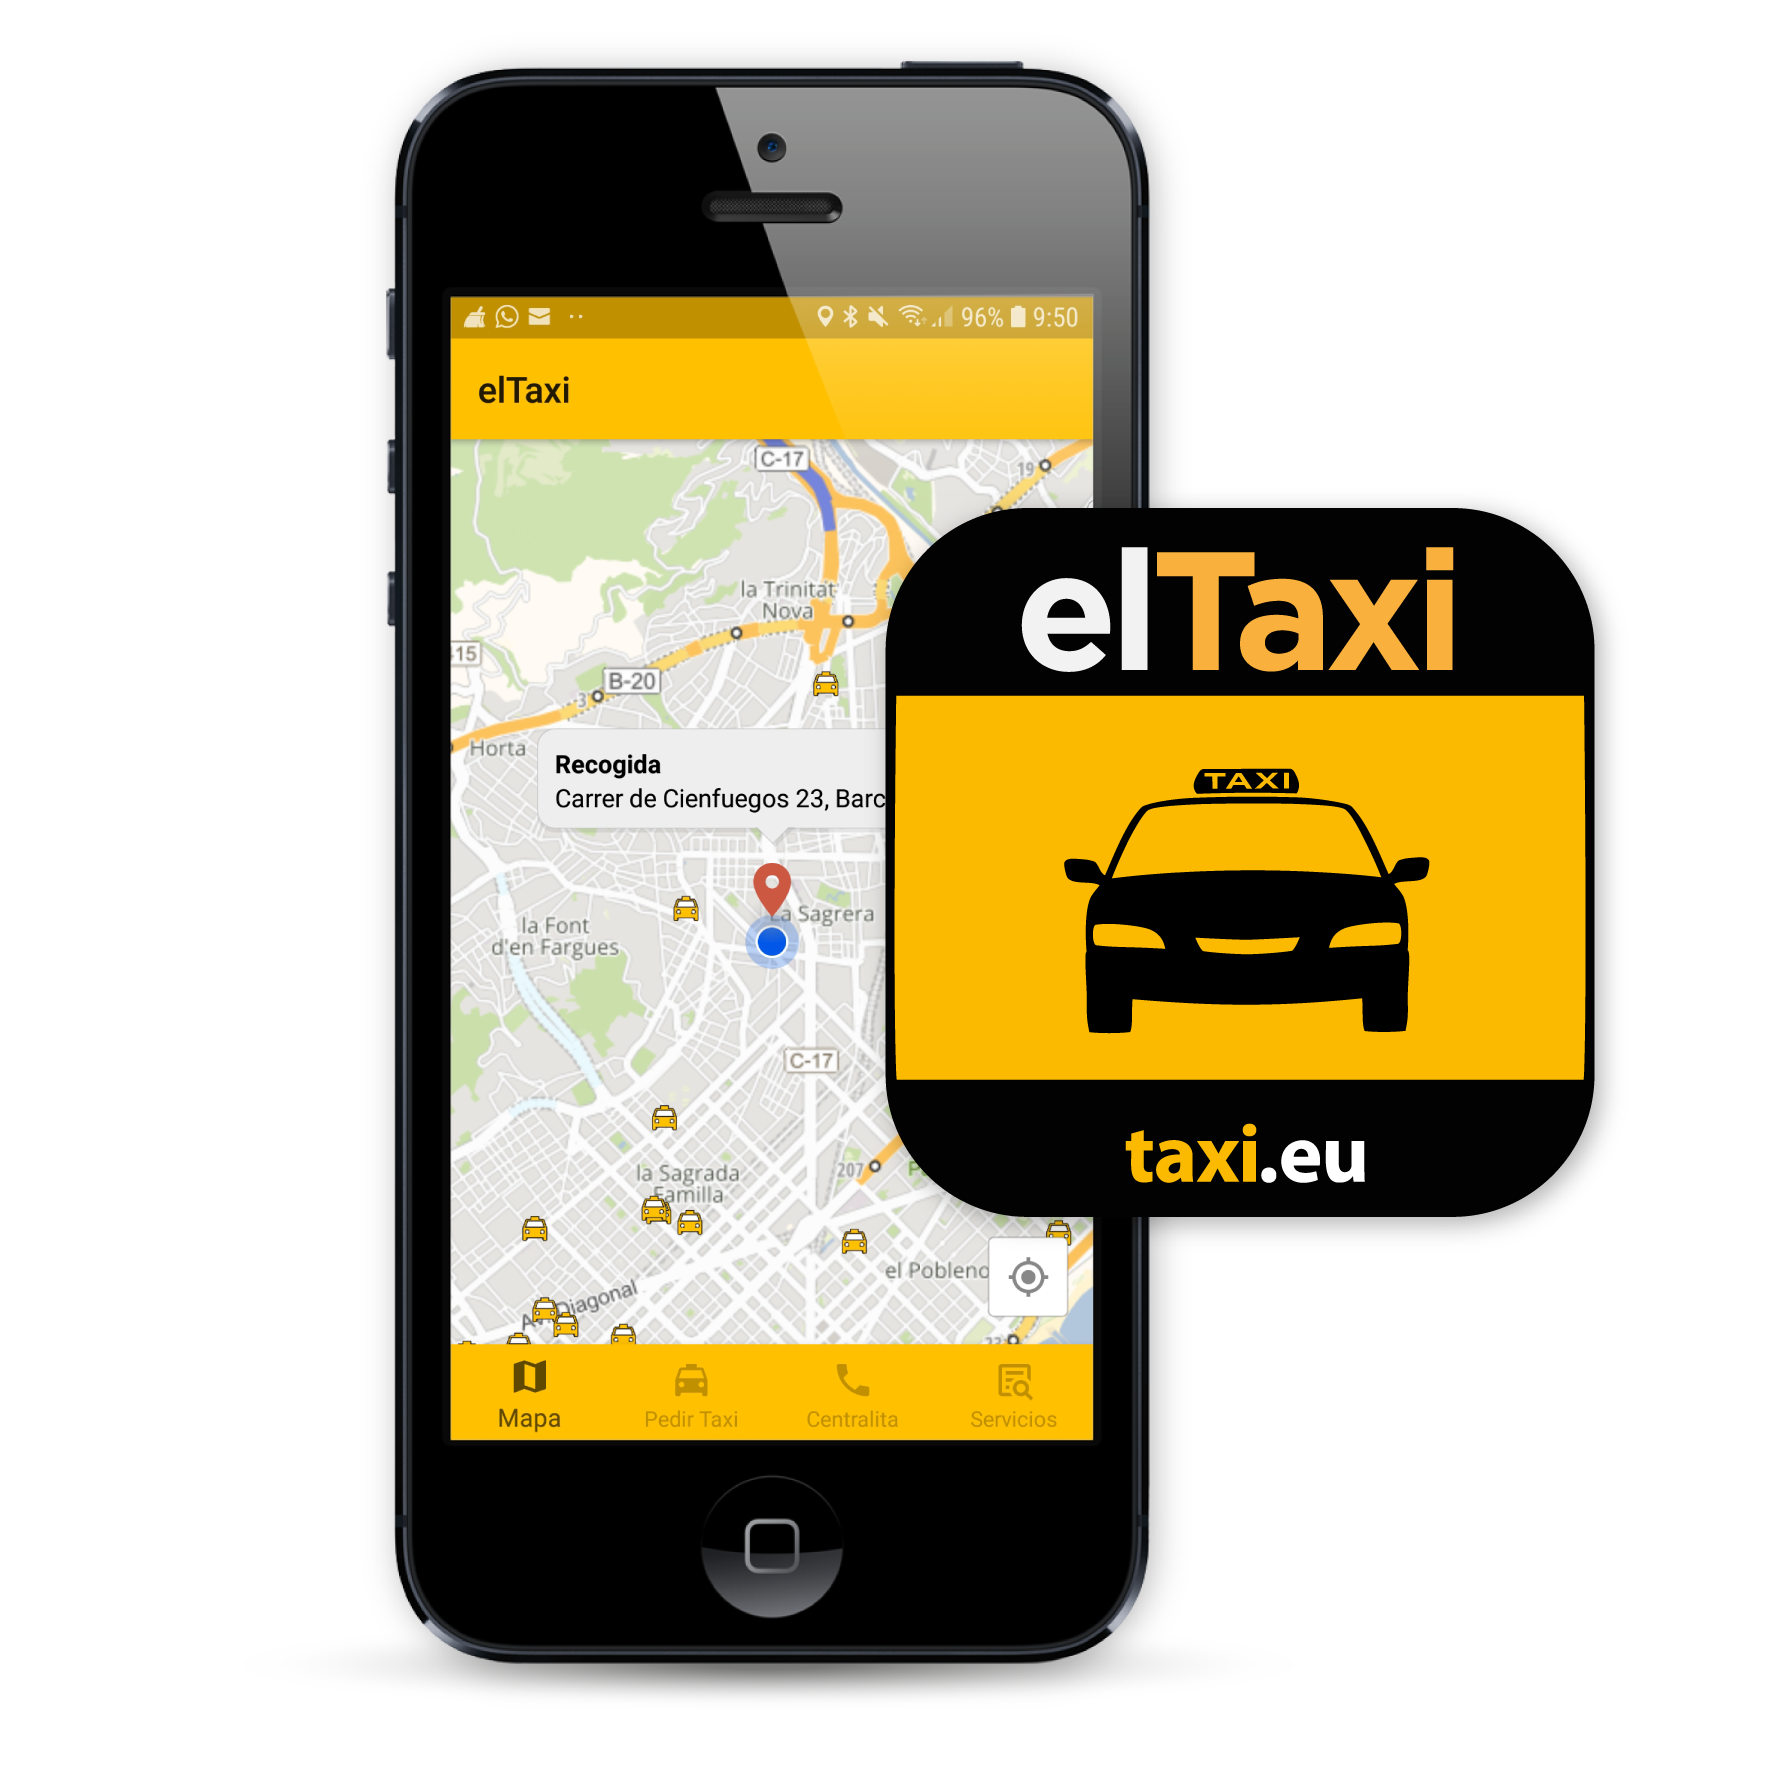 Radio Taxi 033 - ElTaxi